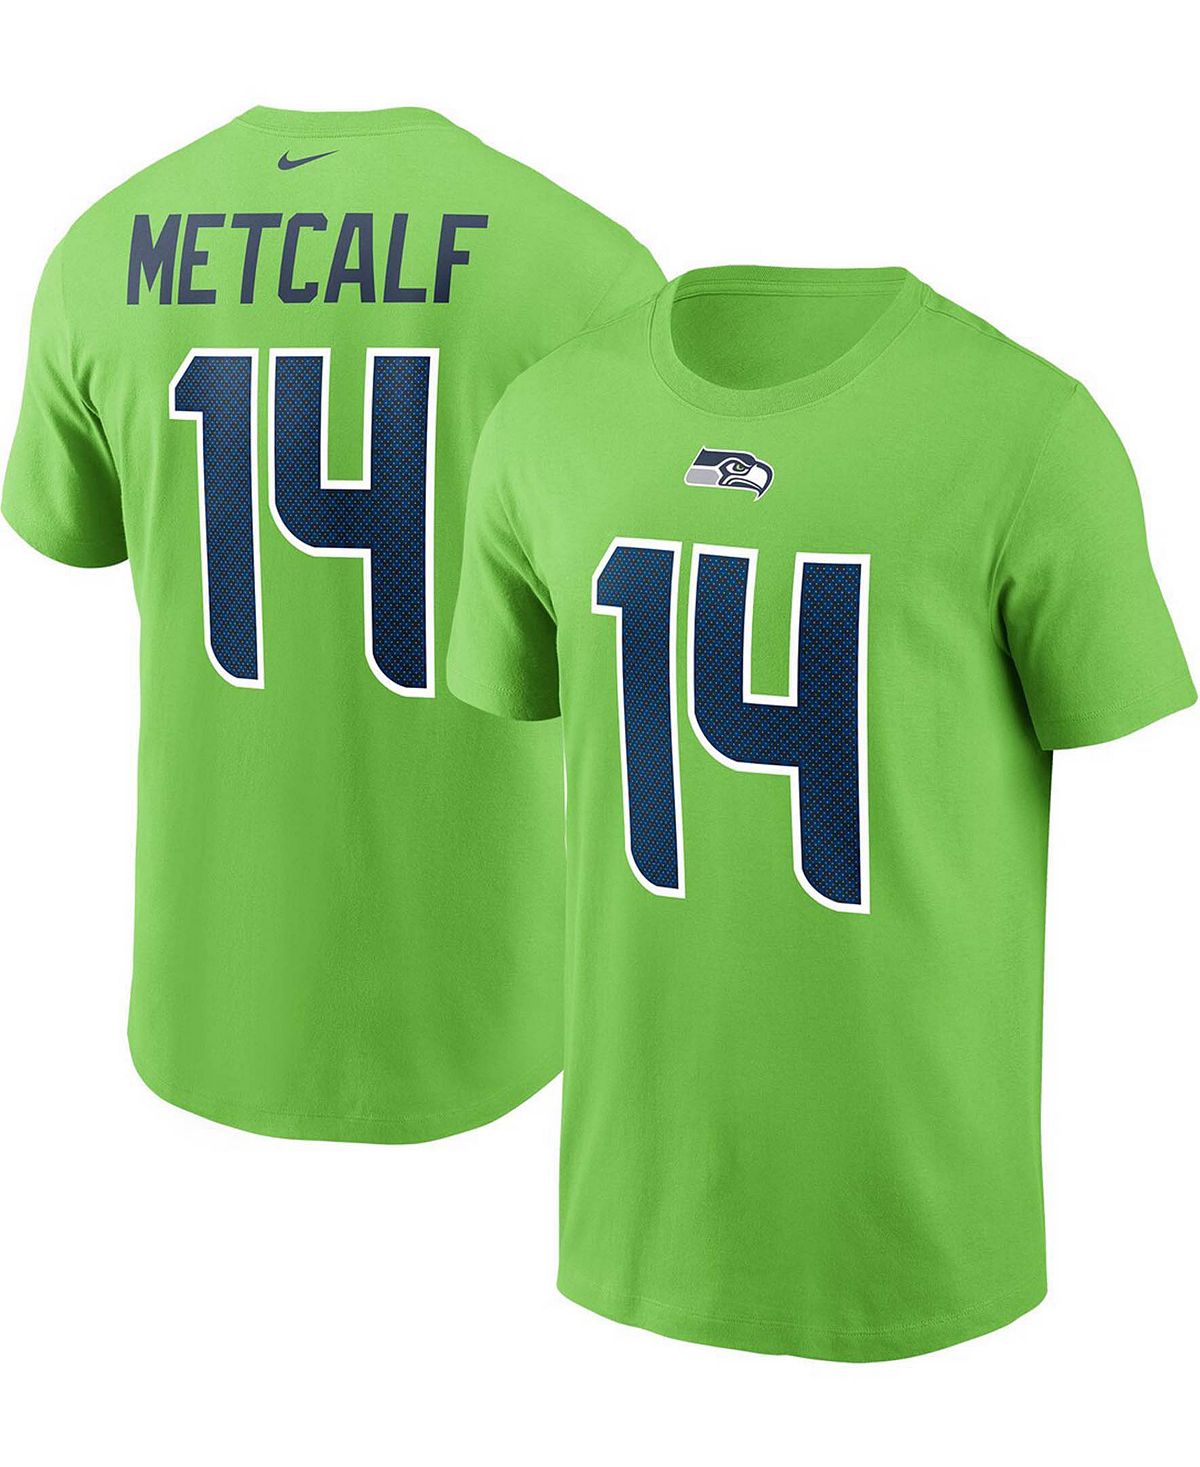 Мужская футболка dk metcalf neon green seattle seahawks с именем и номером Nike, мульти